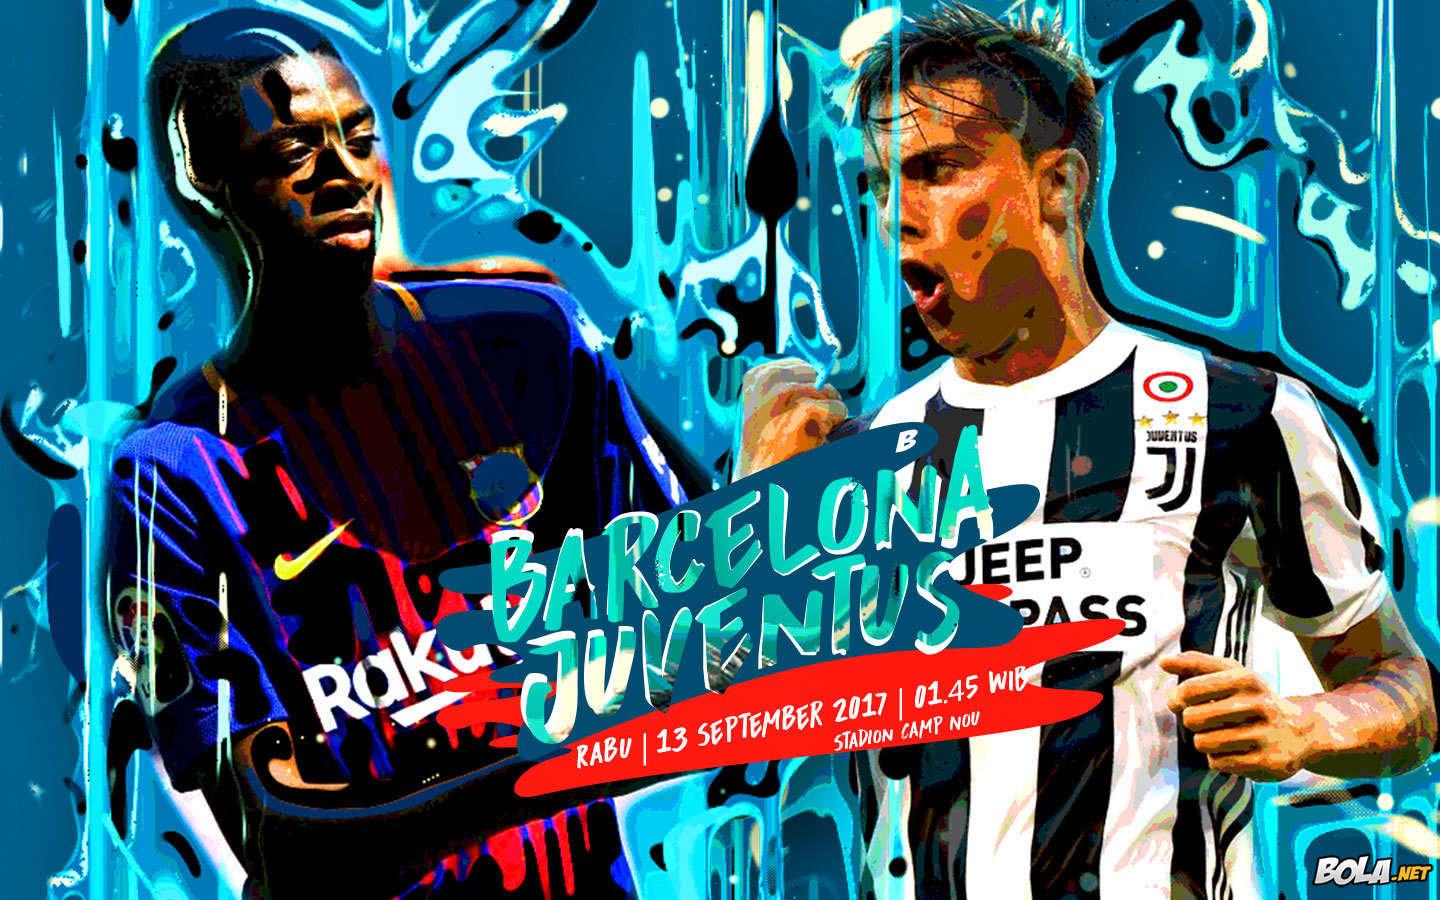 Deskripsi : Wallpaper Barcelona Vs Juventus, size: 1440x900